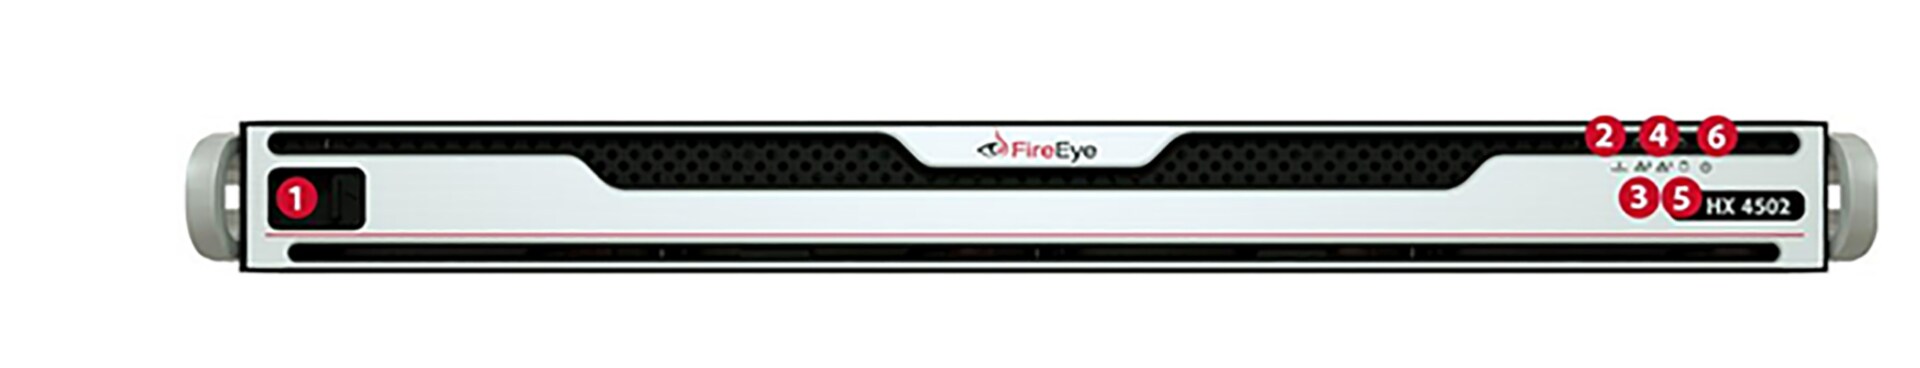 Trellix FireEye HX 4502 Endpoint Security Appliance